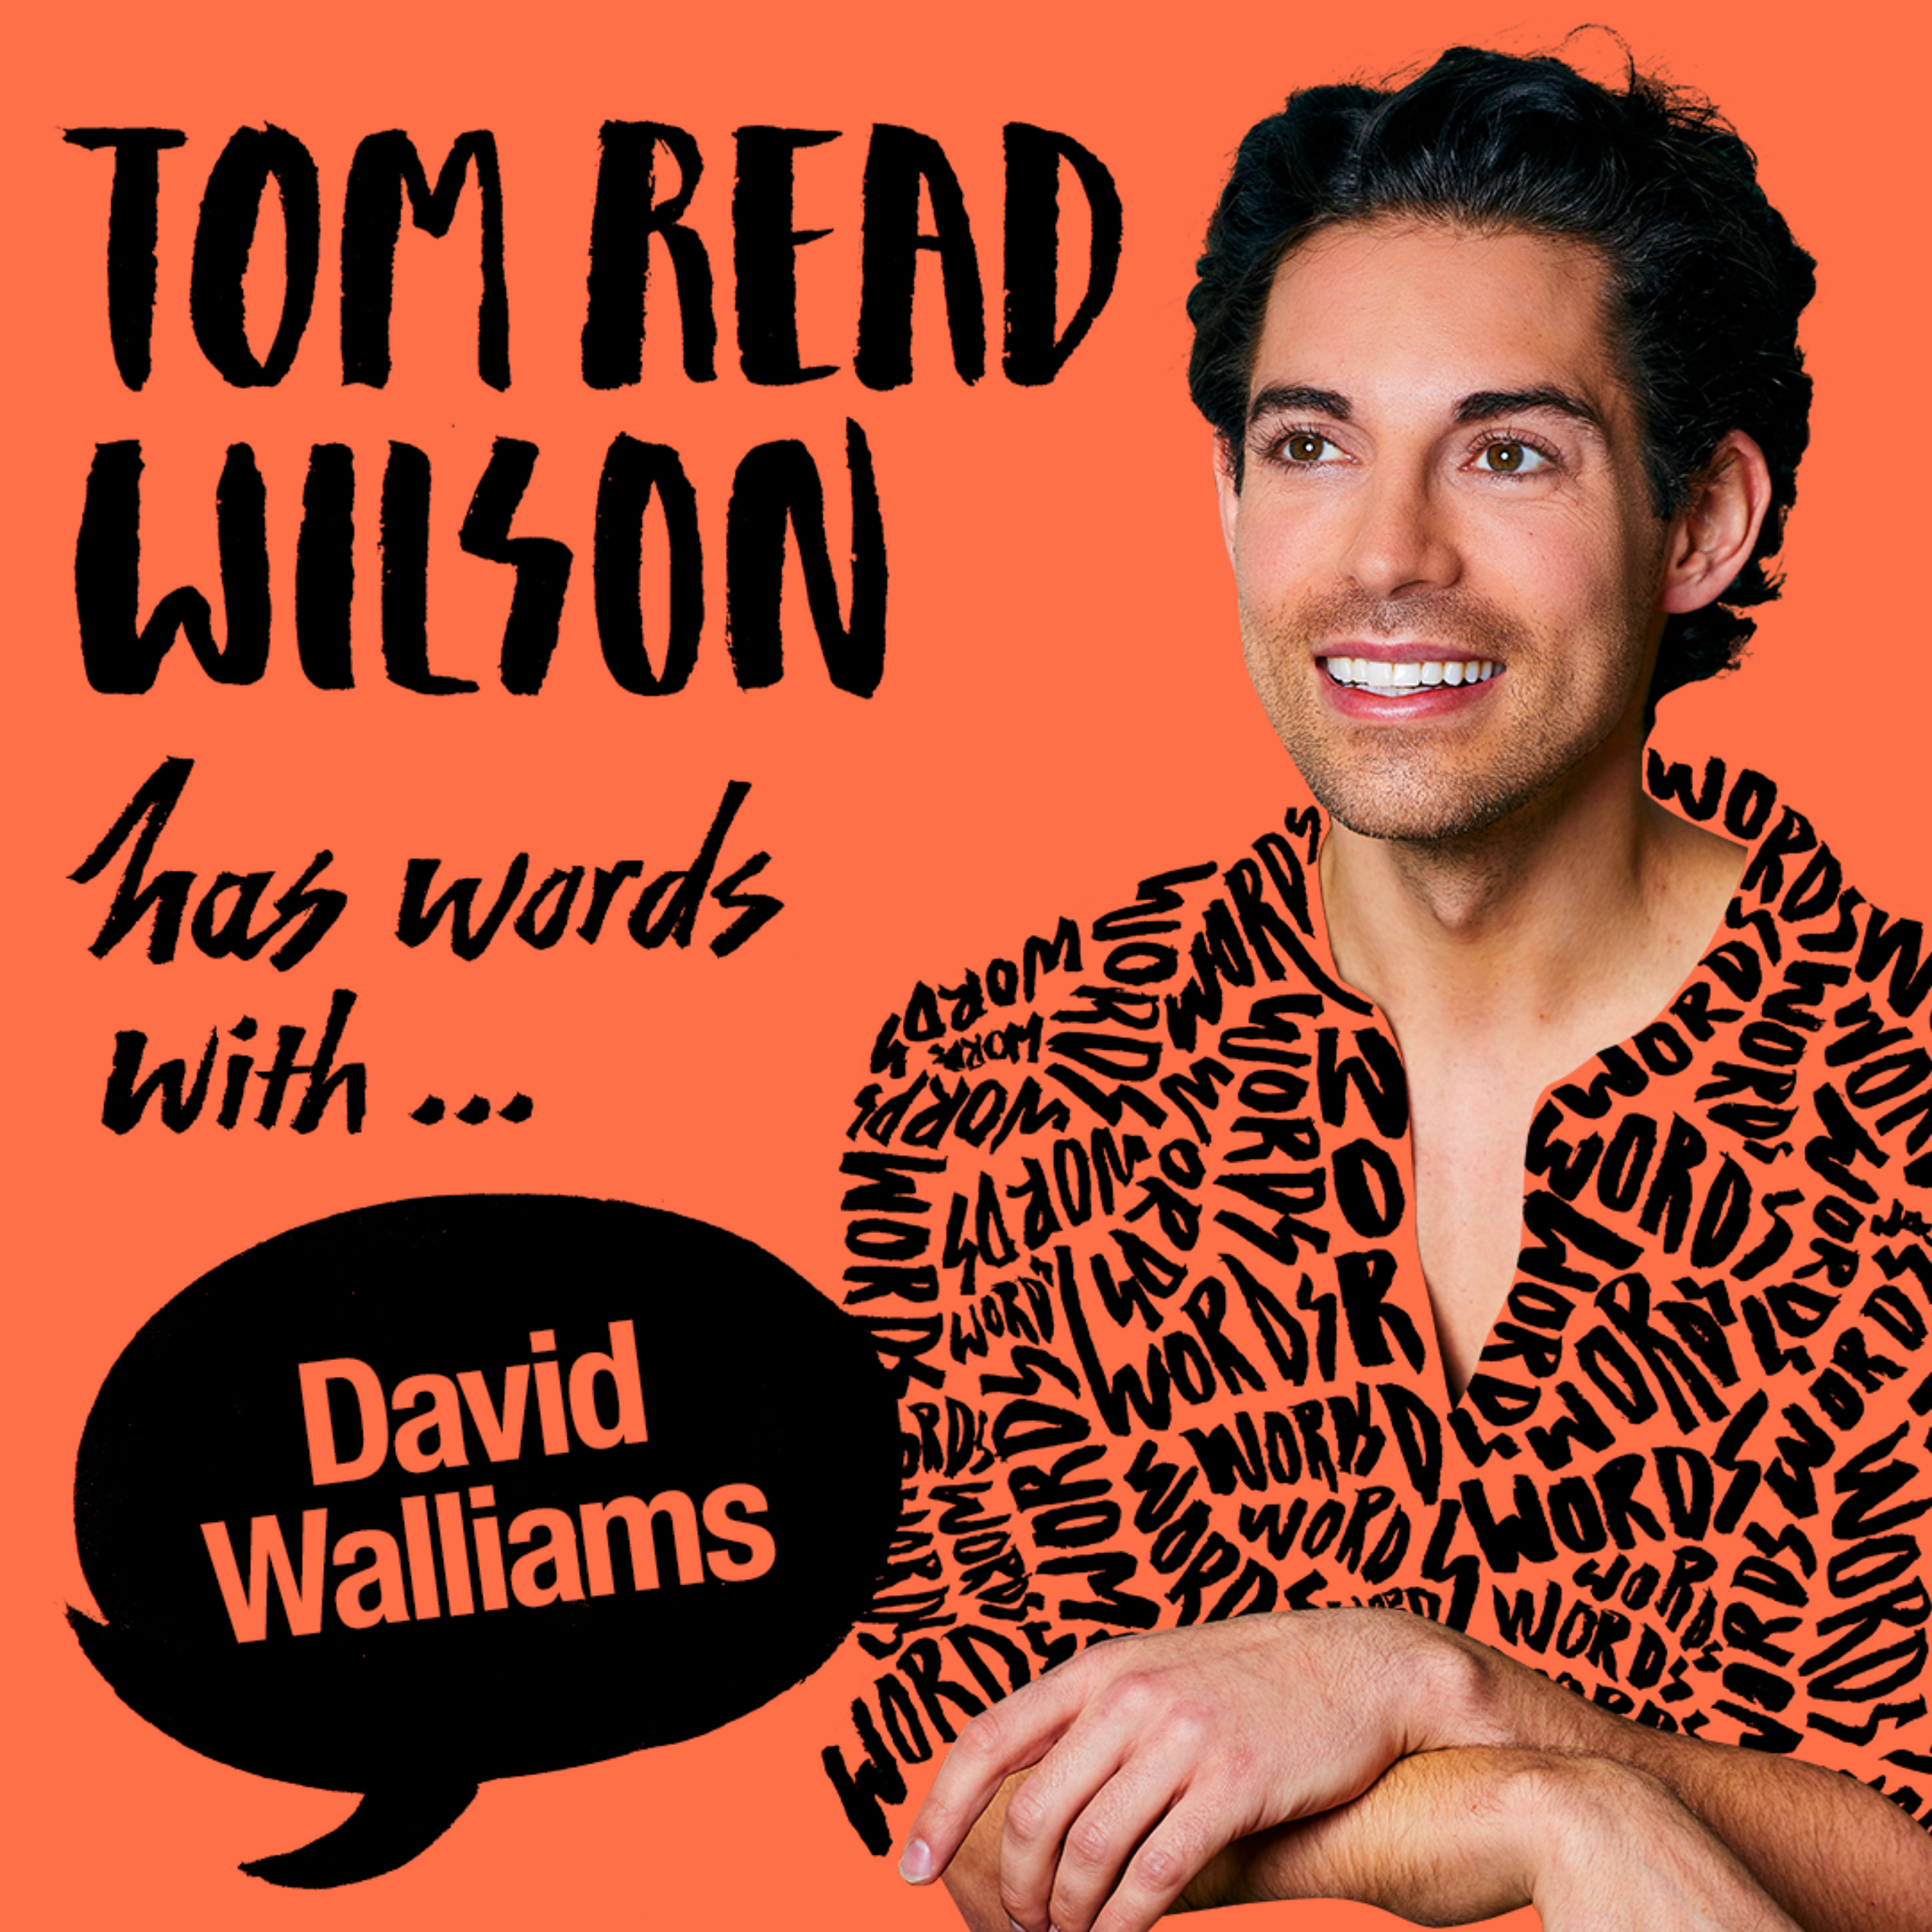 Tom Read Wilson has words with David Walliams